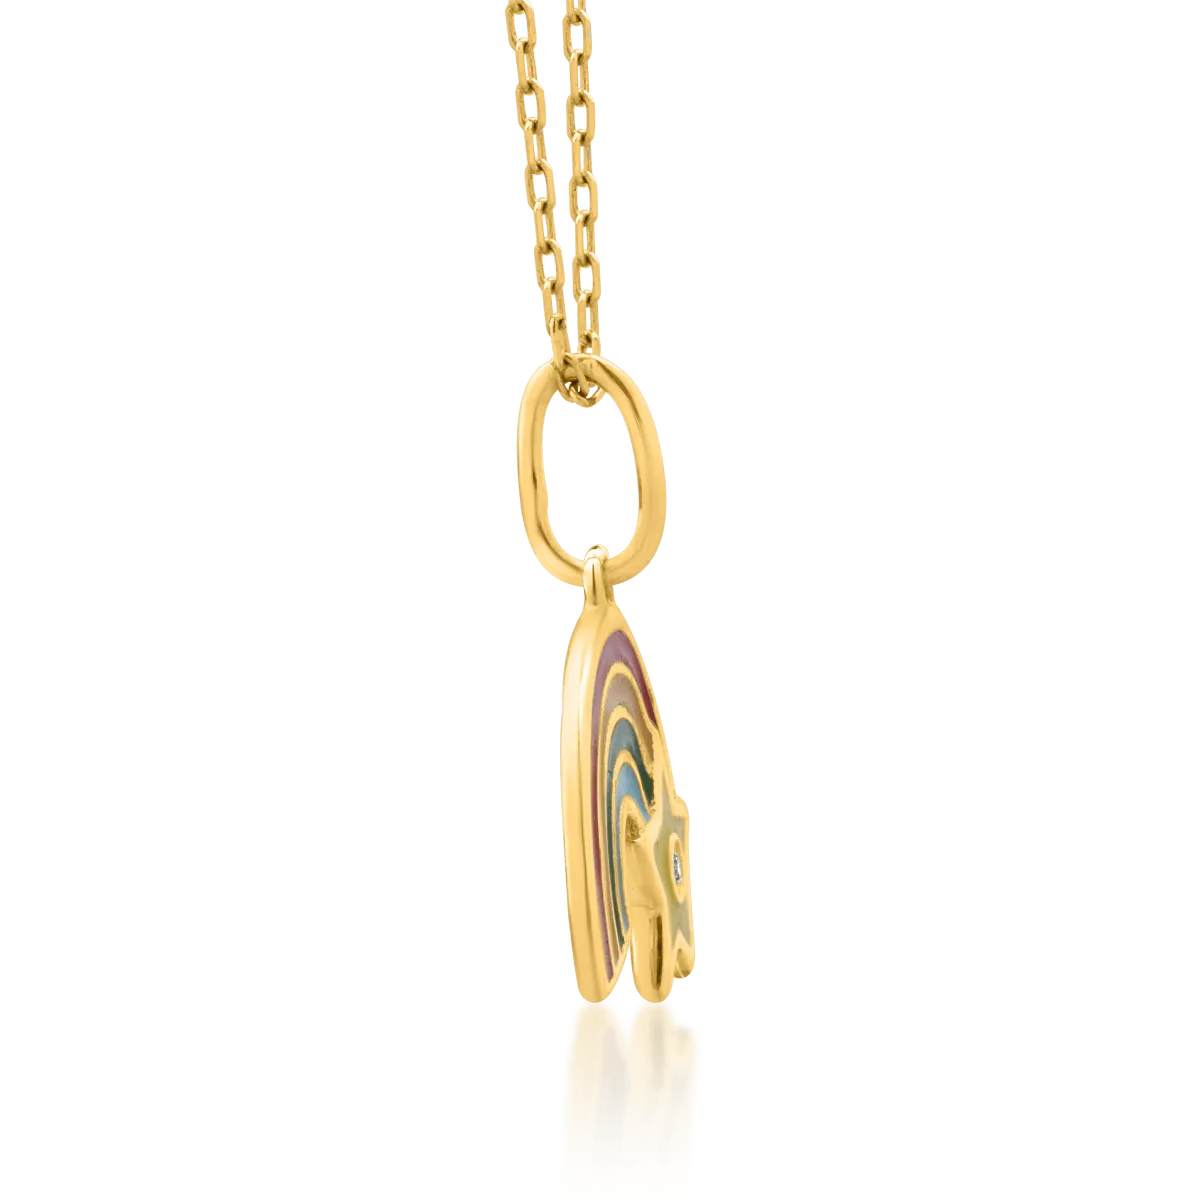 14K yellow gold rainbow children's pendant necklace with 0.003ct diamond